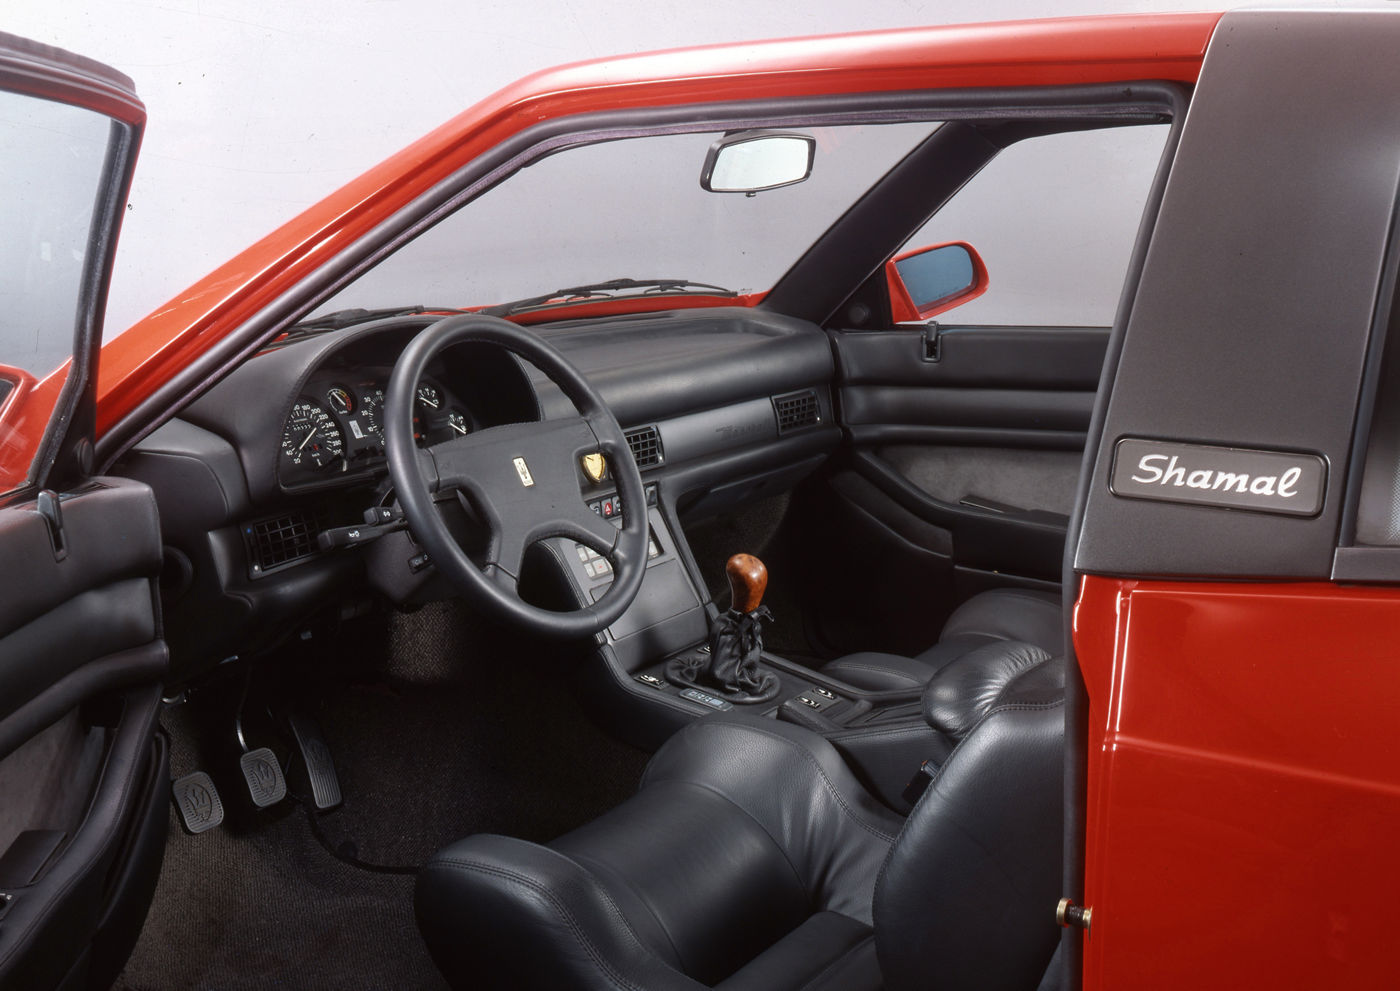 1990 Maserati Shamal - Biturbo - interior view of the classic car model